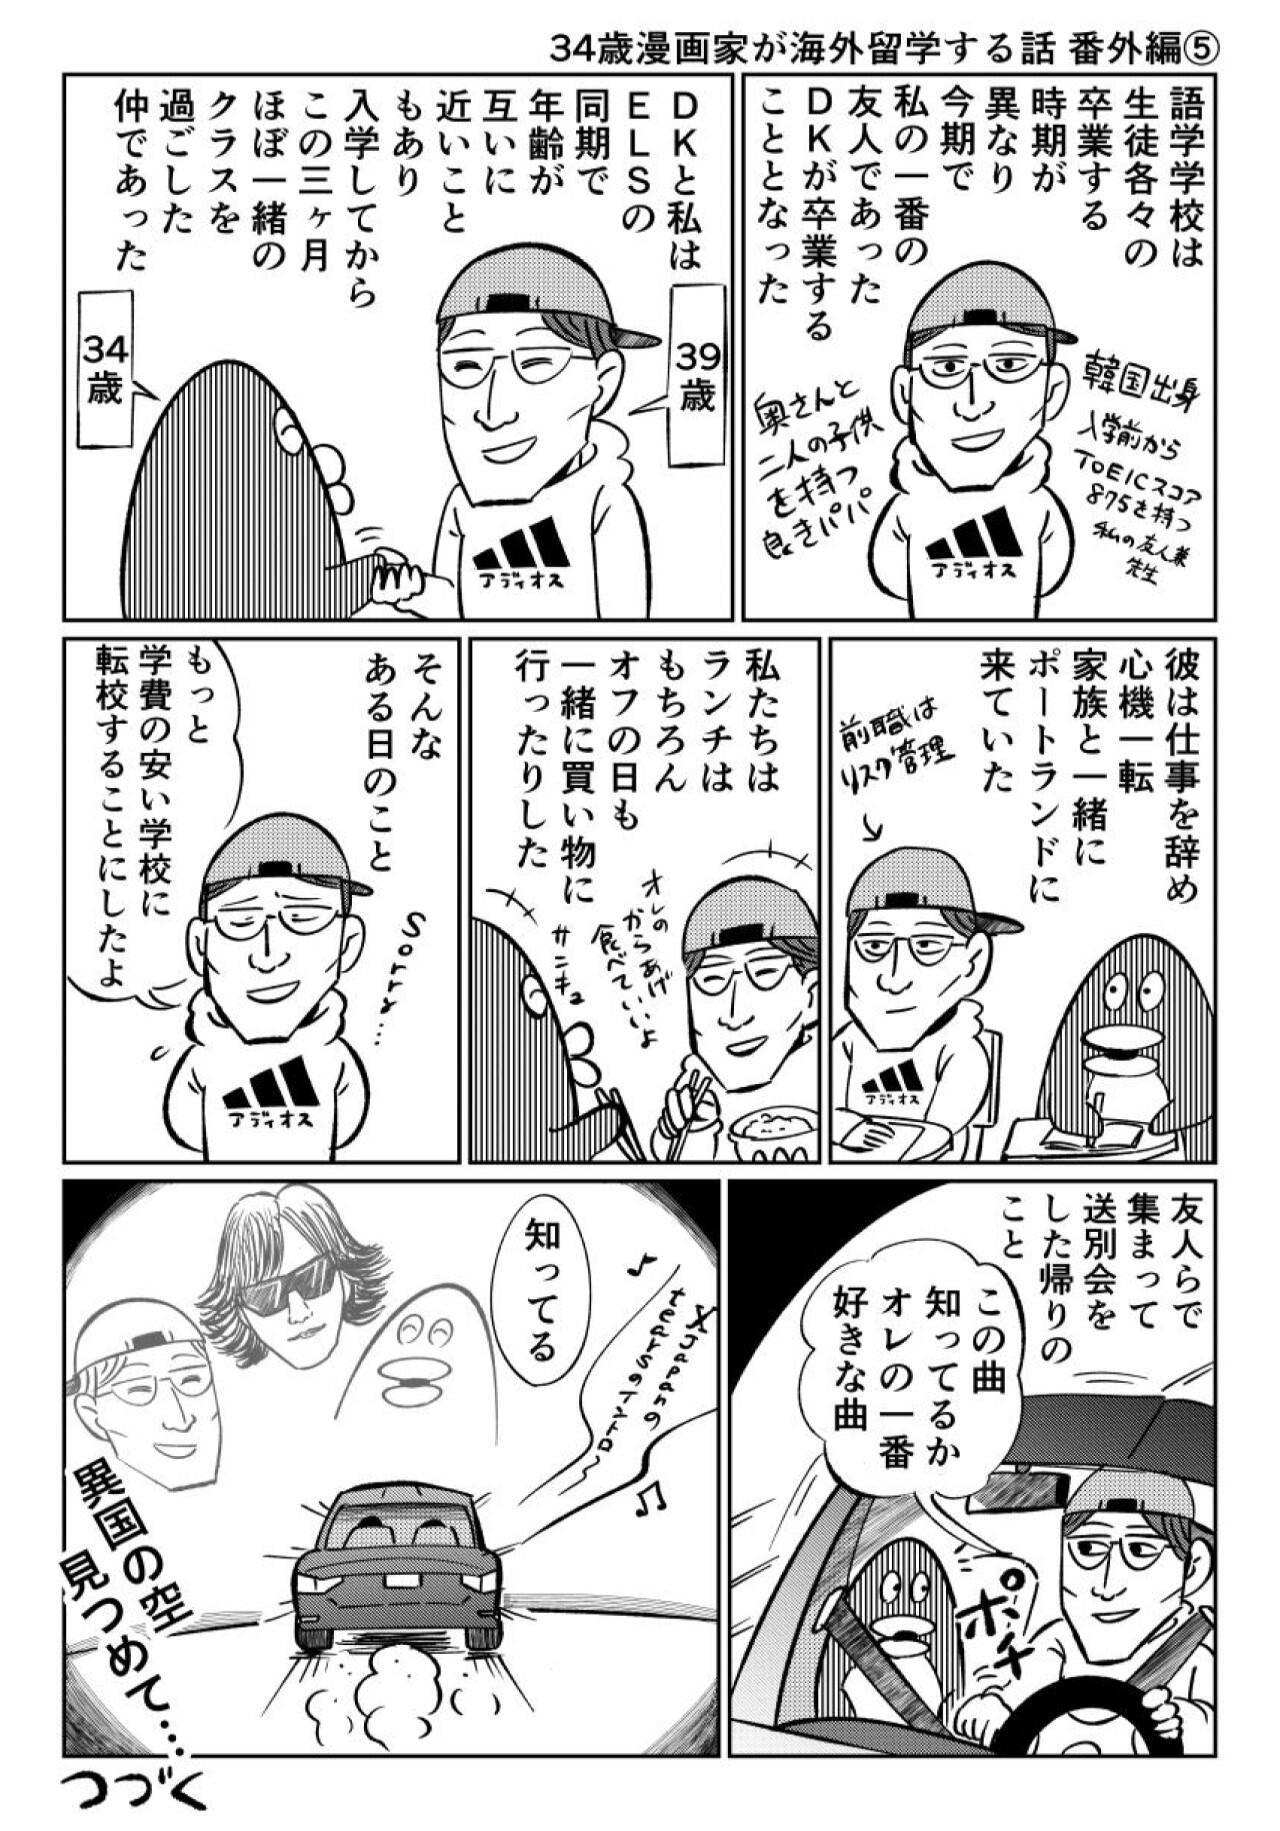 https://www.ryugaku.co.jp/column/images/34sai_ex5_1280.jpg